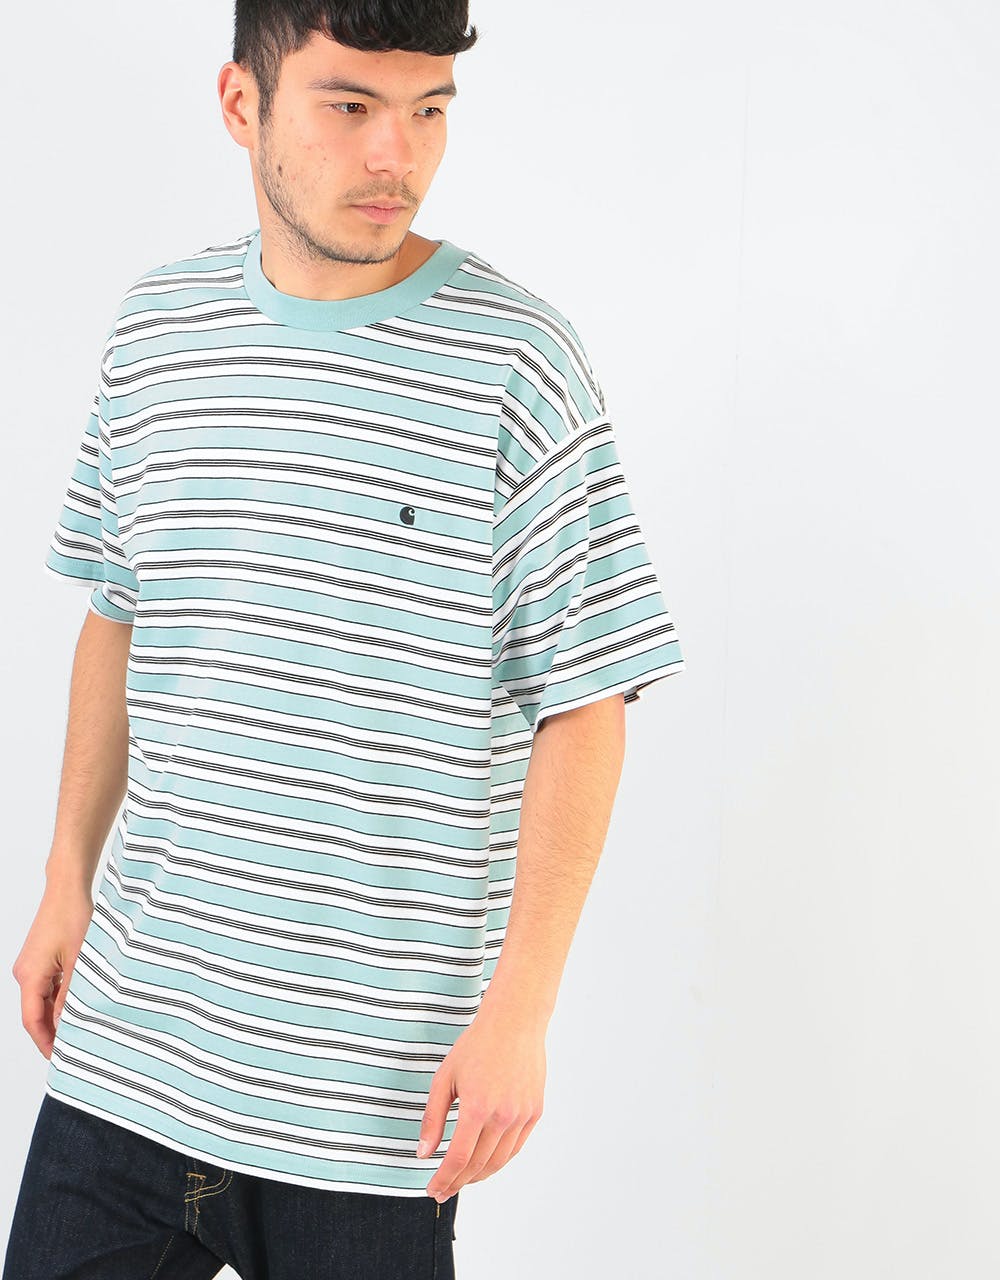 Carhartt WIP S/S Huron Stripe T-Shirt - Soft Aloe/Black